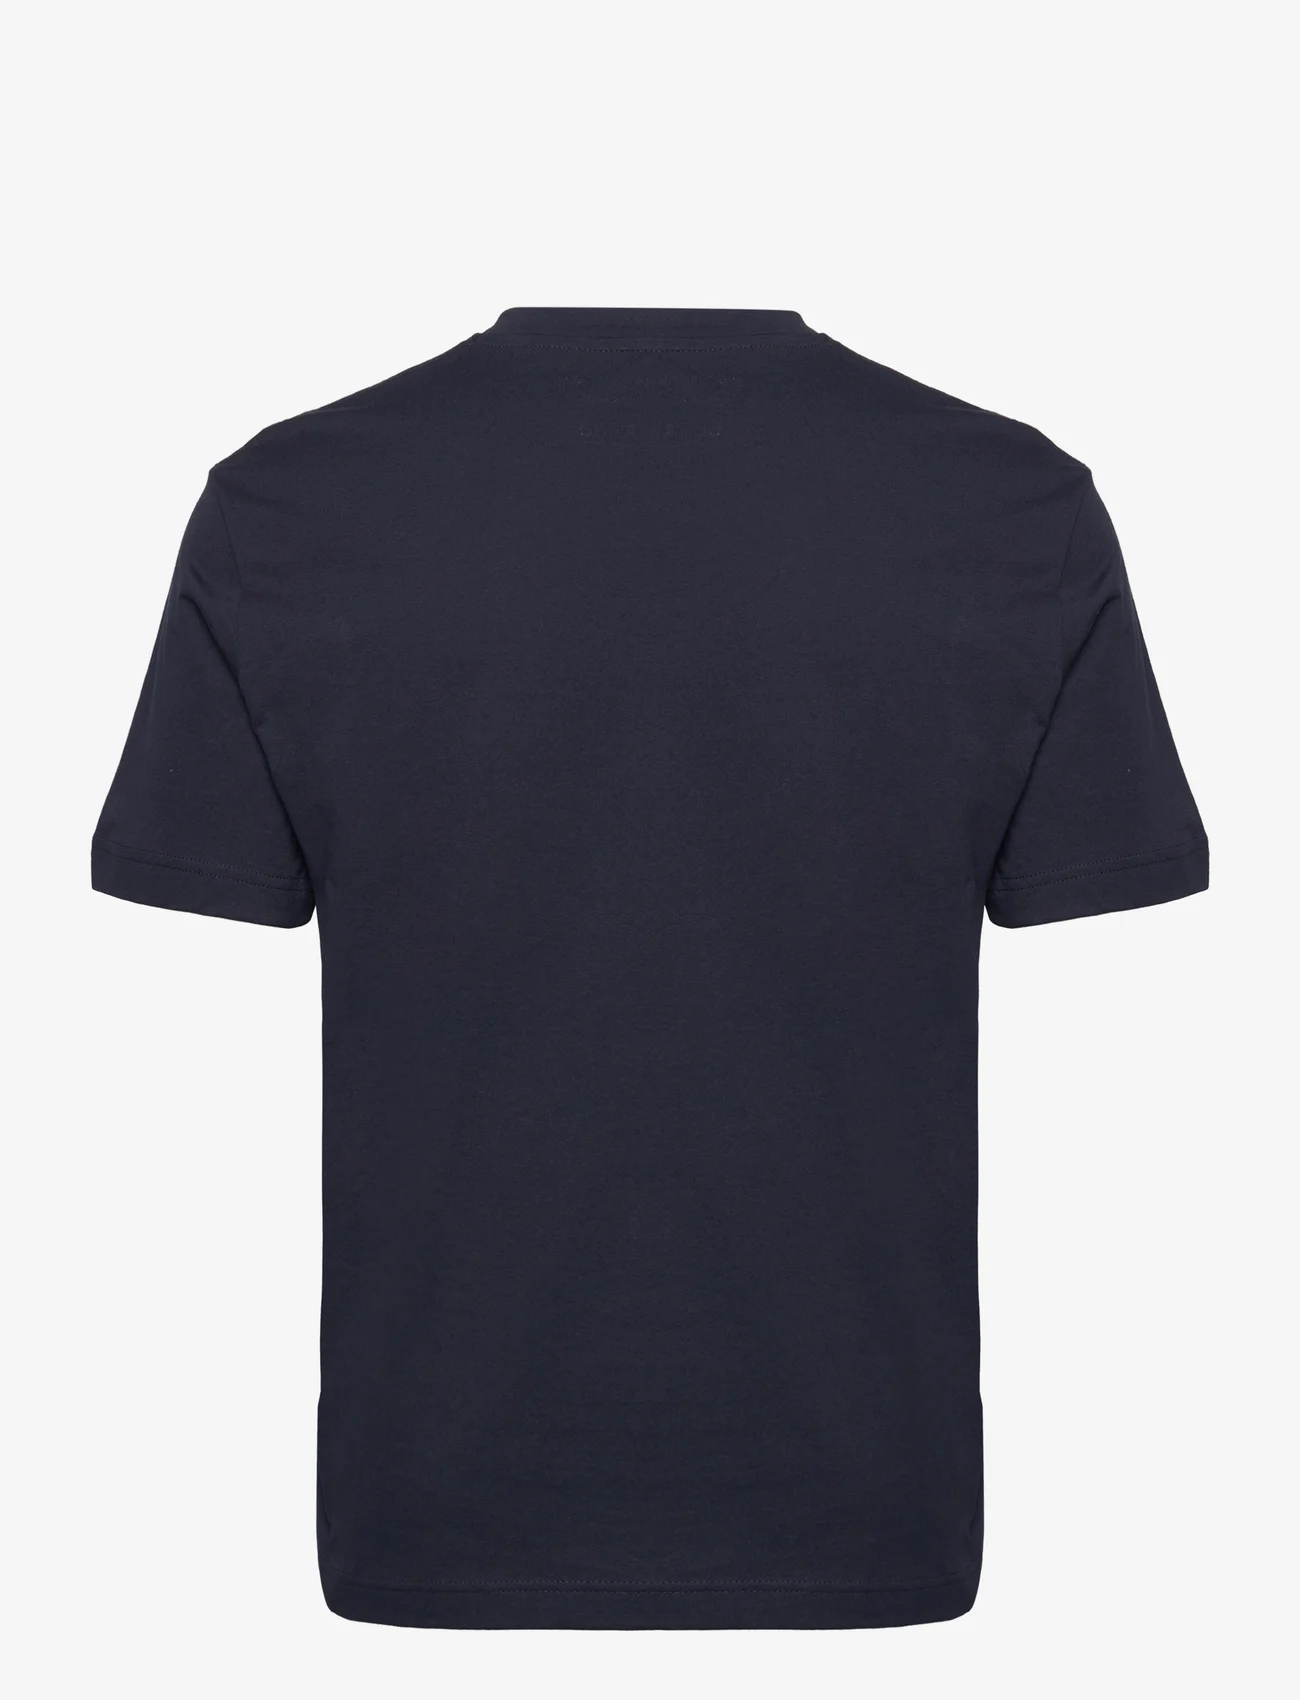 Tom Tailor - printed crewneck t-shirt - lägsta priserna - sky captain blue - 1